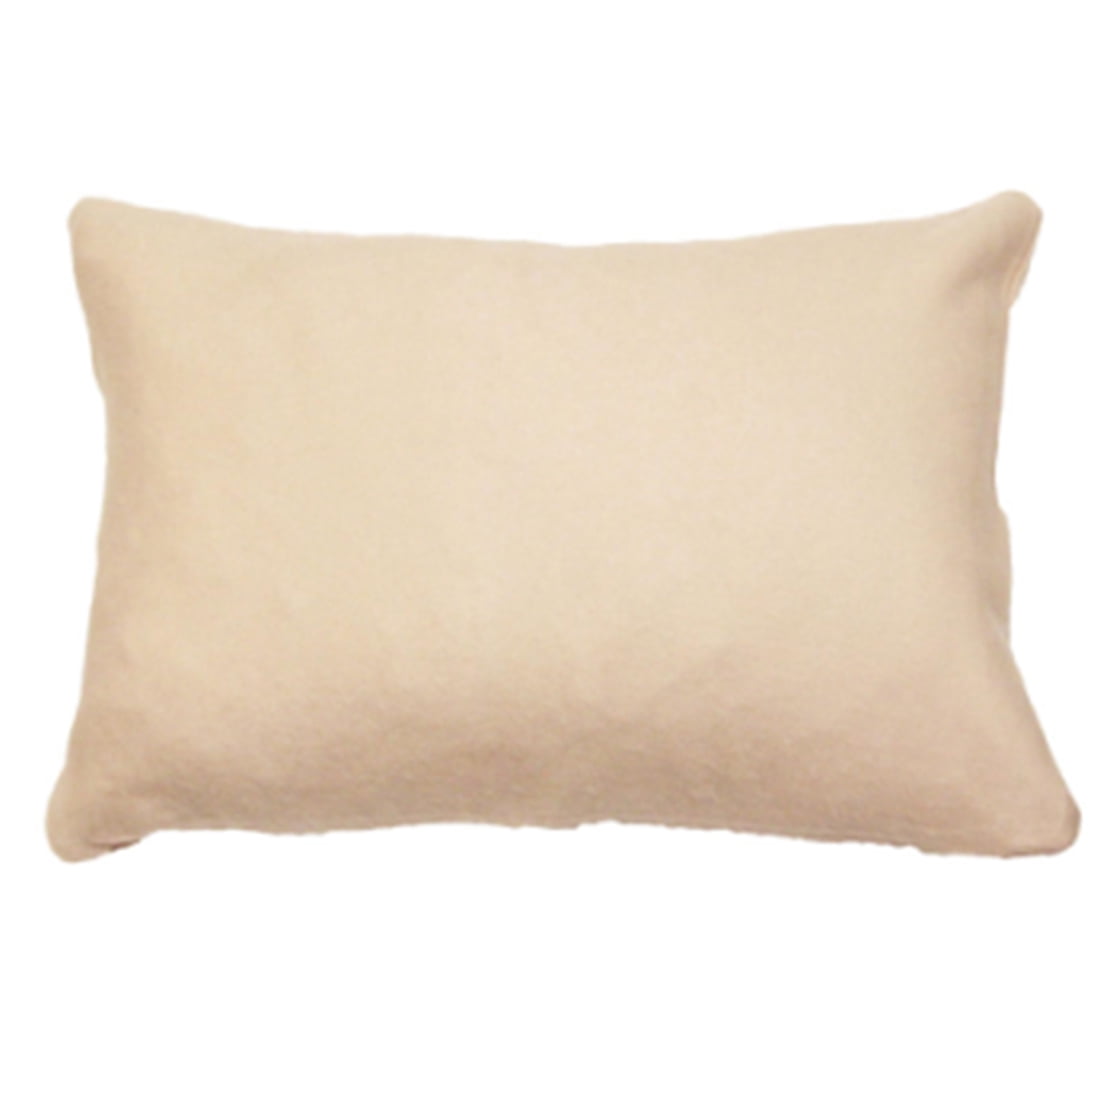 oblong round pillows